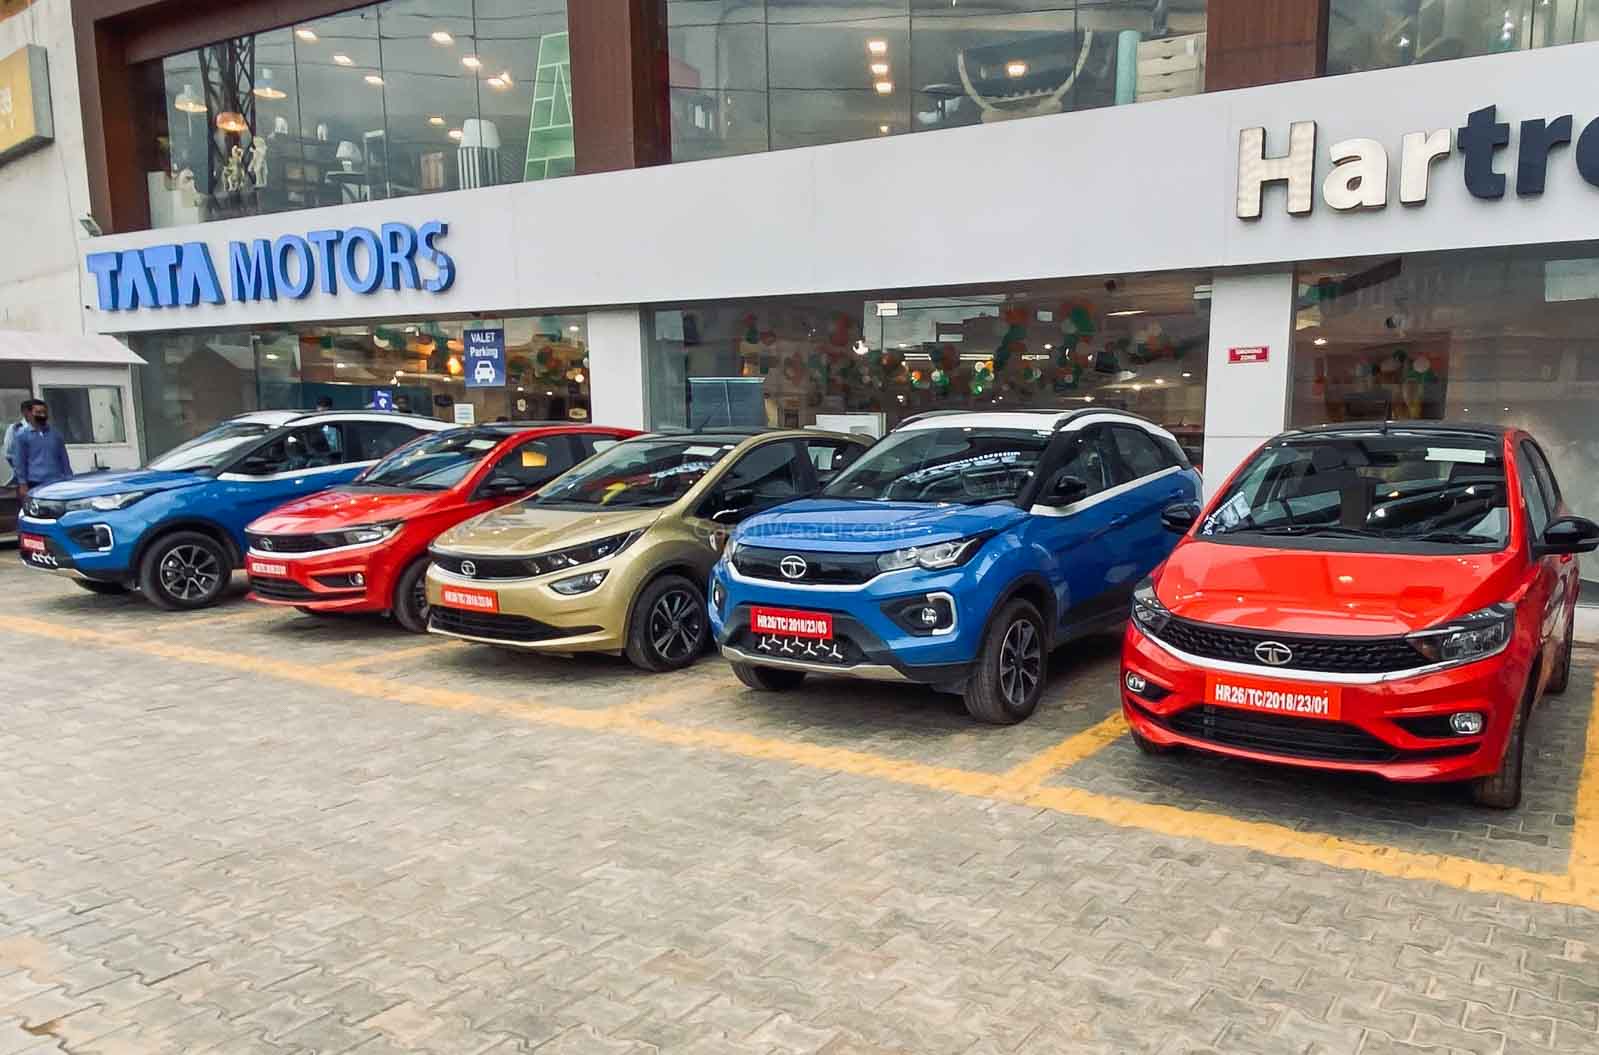 Tata Motors opens 8 new showrooms in Ahmedabad, Auto News, ET Auto